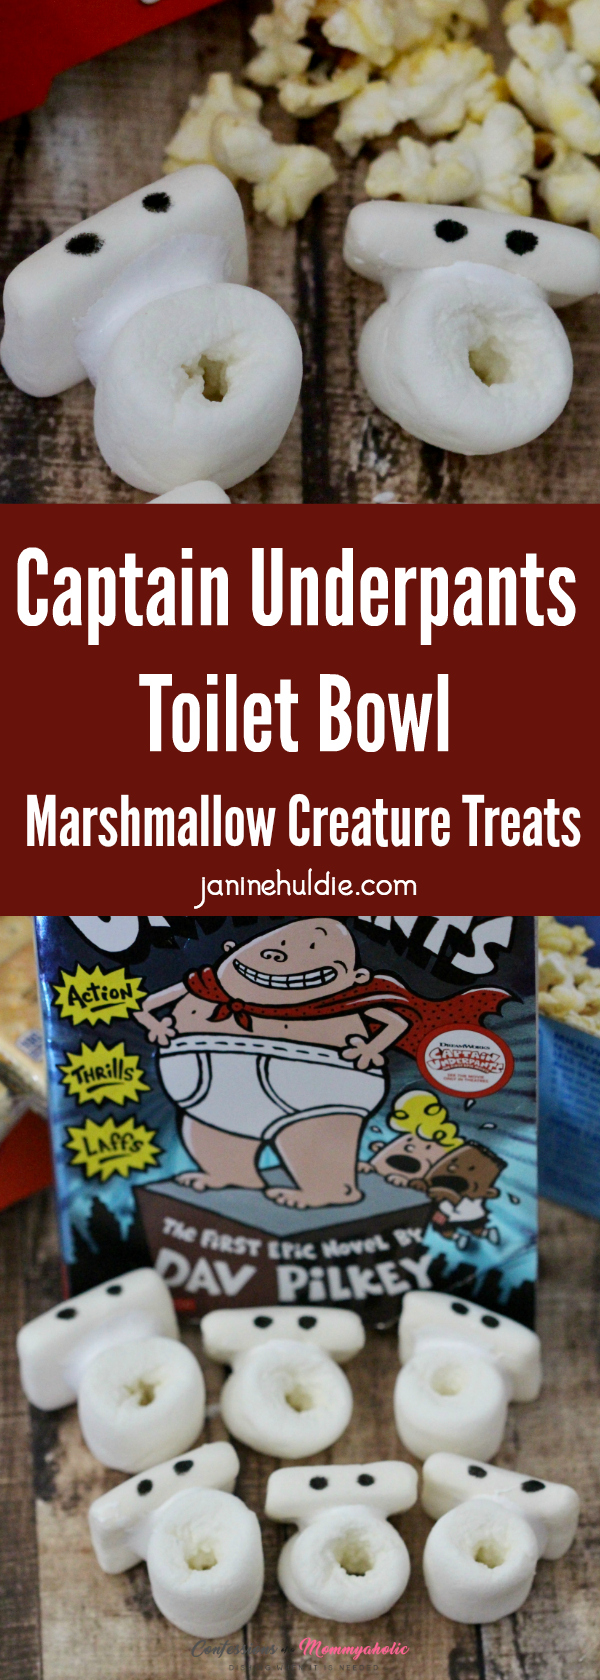 Captain Underpants Toilet Bowl Marshmallow Creature Treats